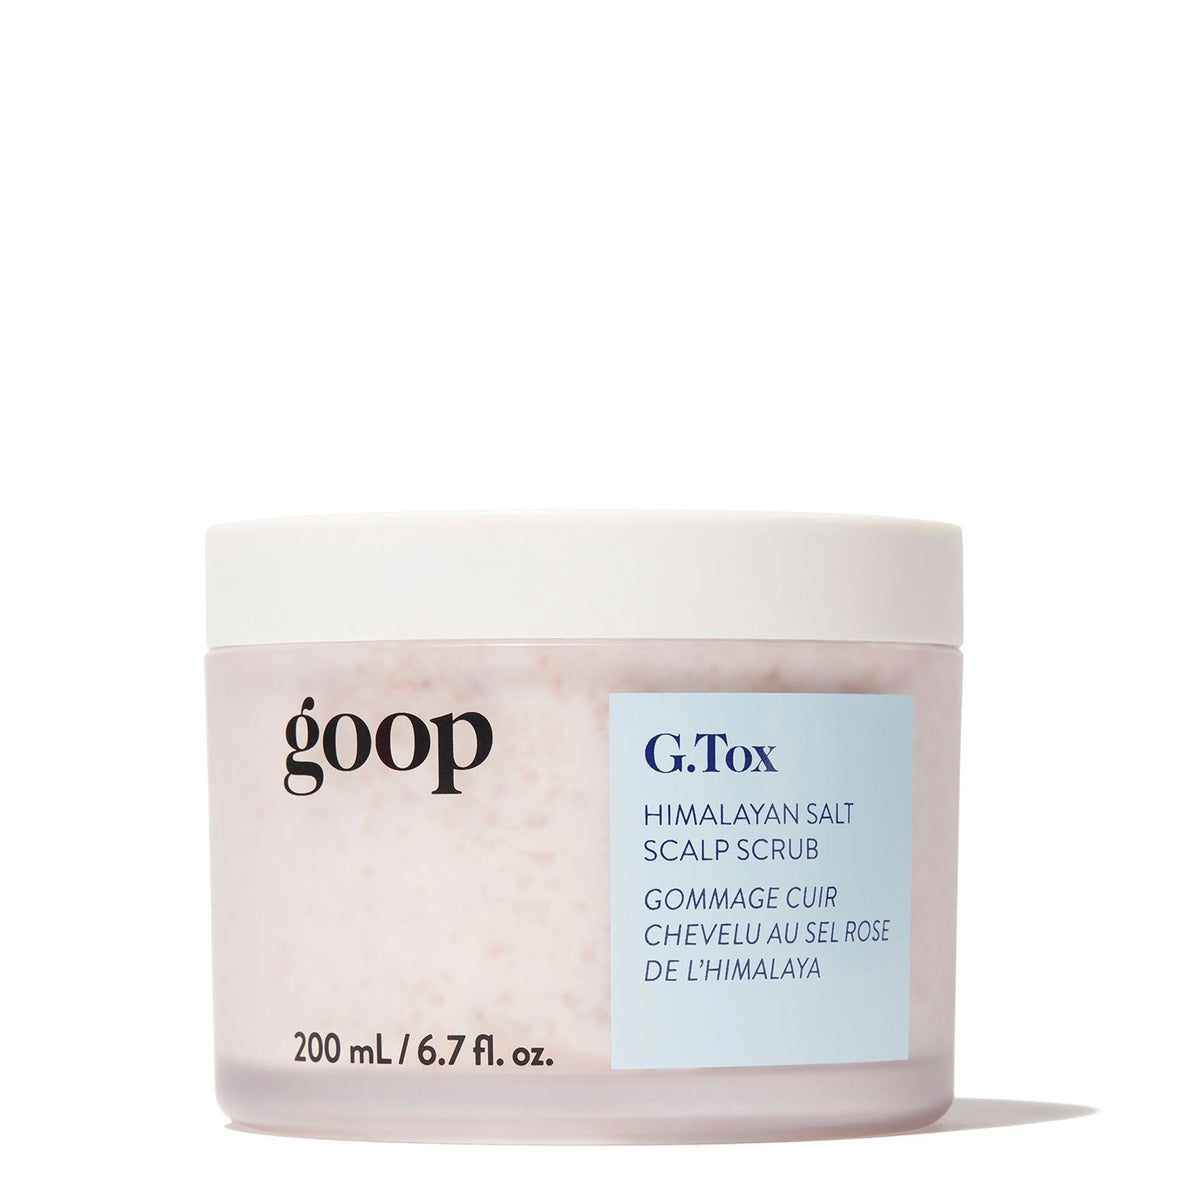 Goop G.Tox Himalayan Salt Scalp Scrub Shampoo